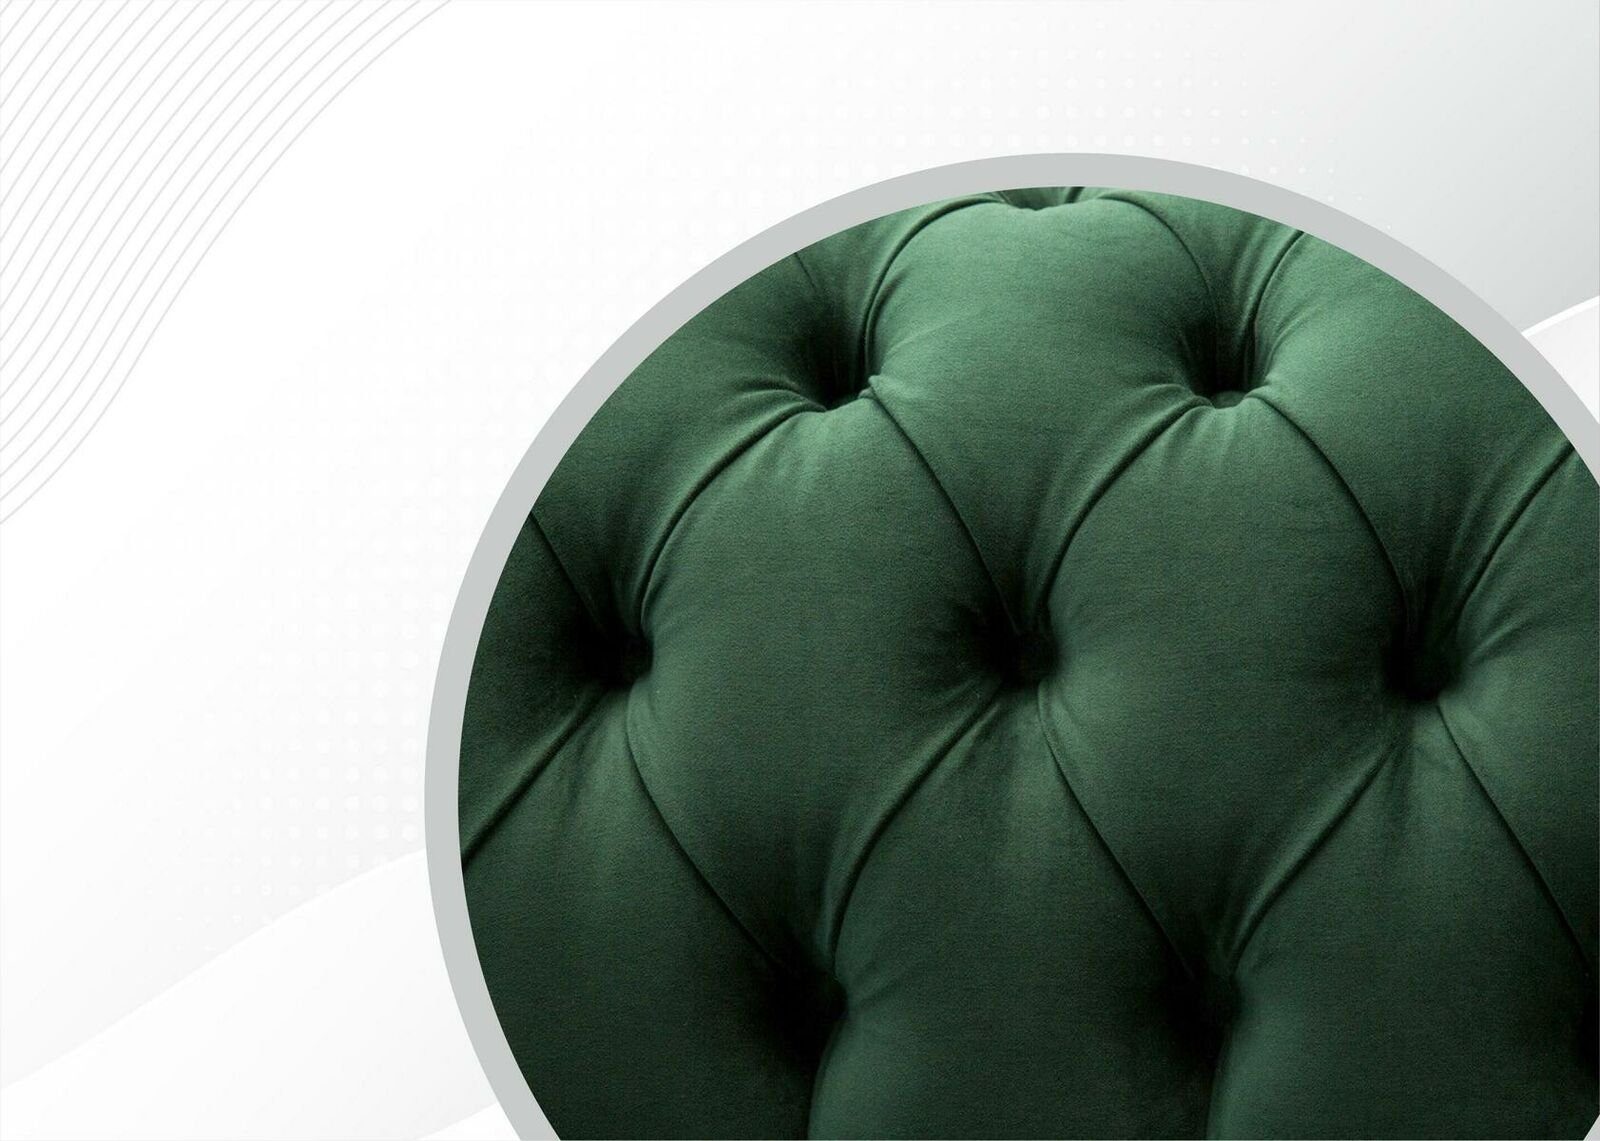 in moderne Chesterfield Chesterfield-Sofa Europe JVmoebel Große Neu, Grüne Couch Sofa Made Luxus